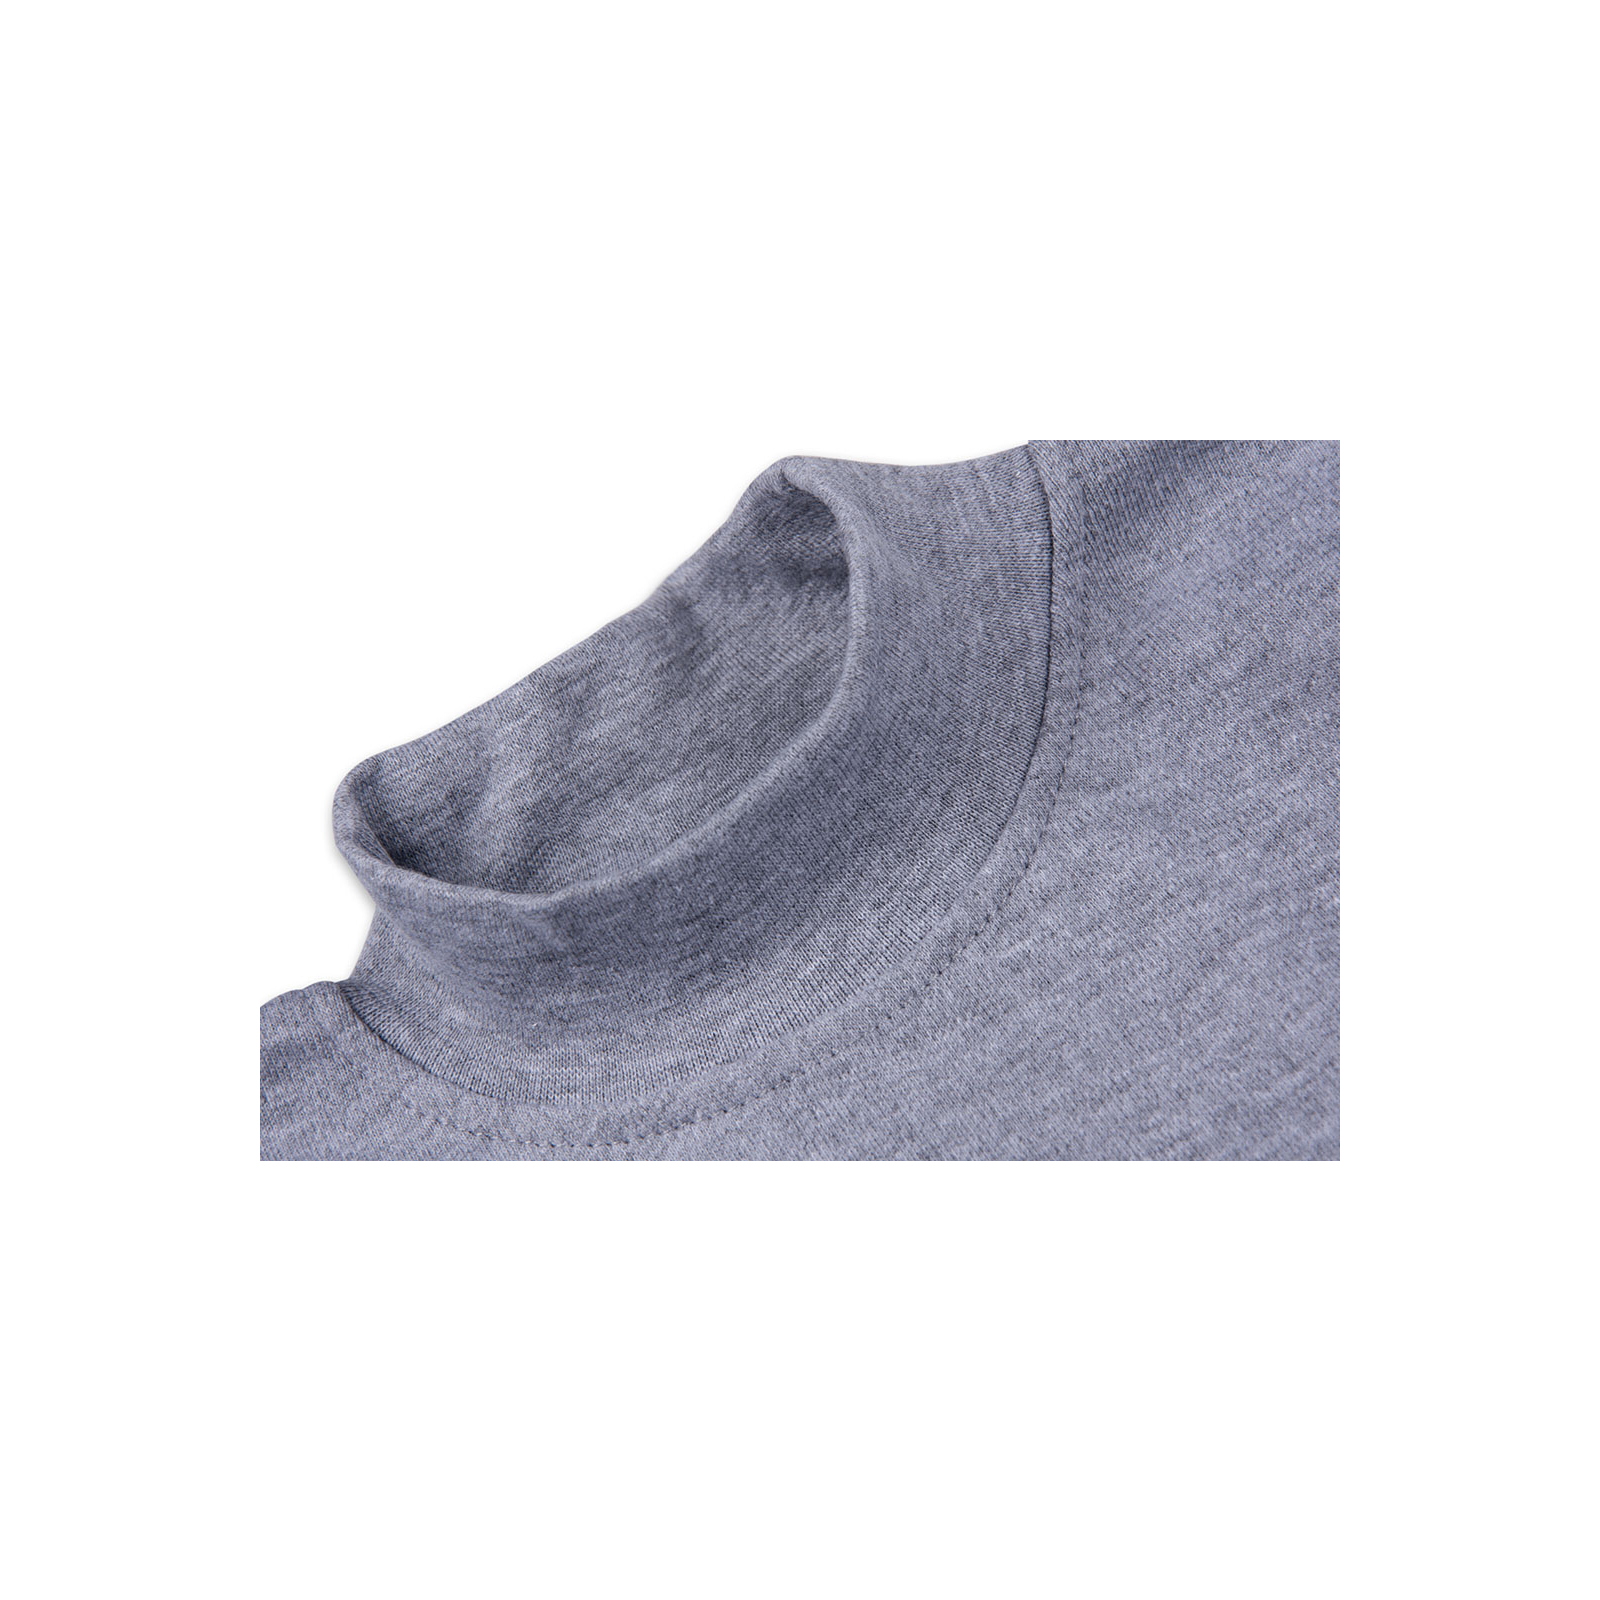 Кофта Lovetti водолазка серая меланжевая (1012-110-gray) изображение 3